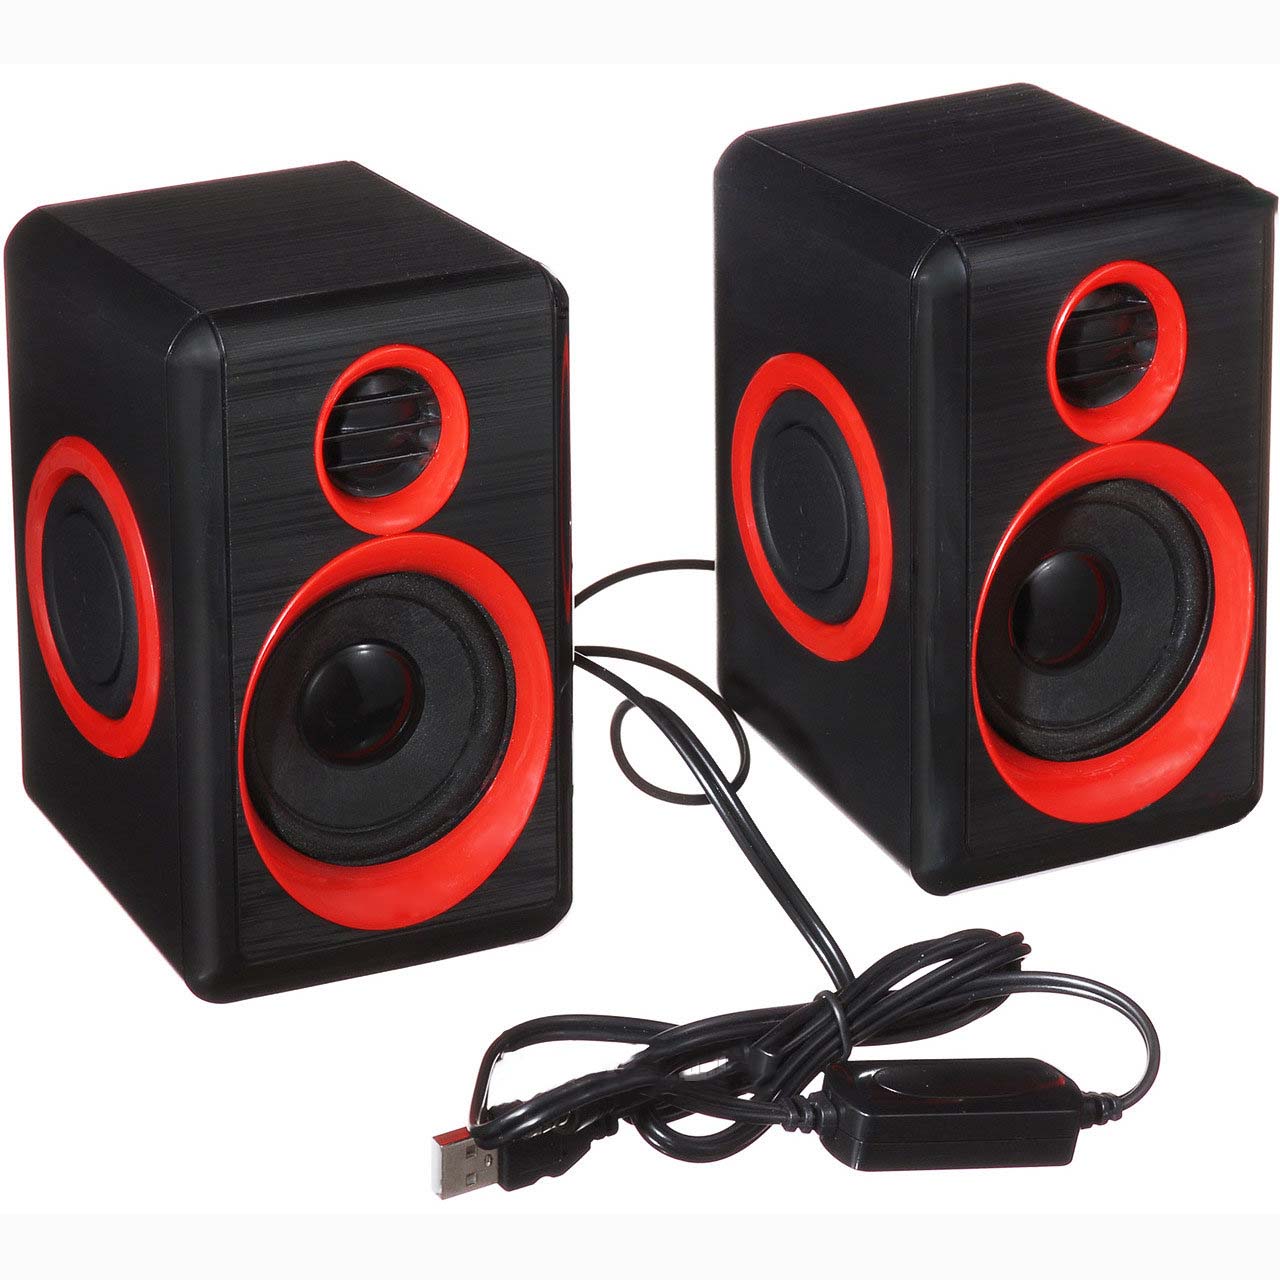 SPEAKER MULTIMEDIA HOTMAI HT-165 USB 3W ,Speakers